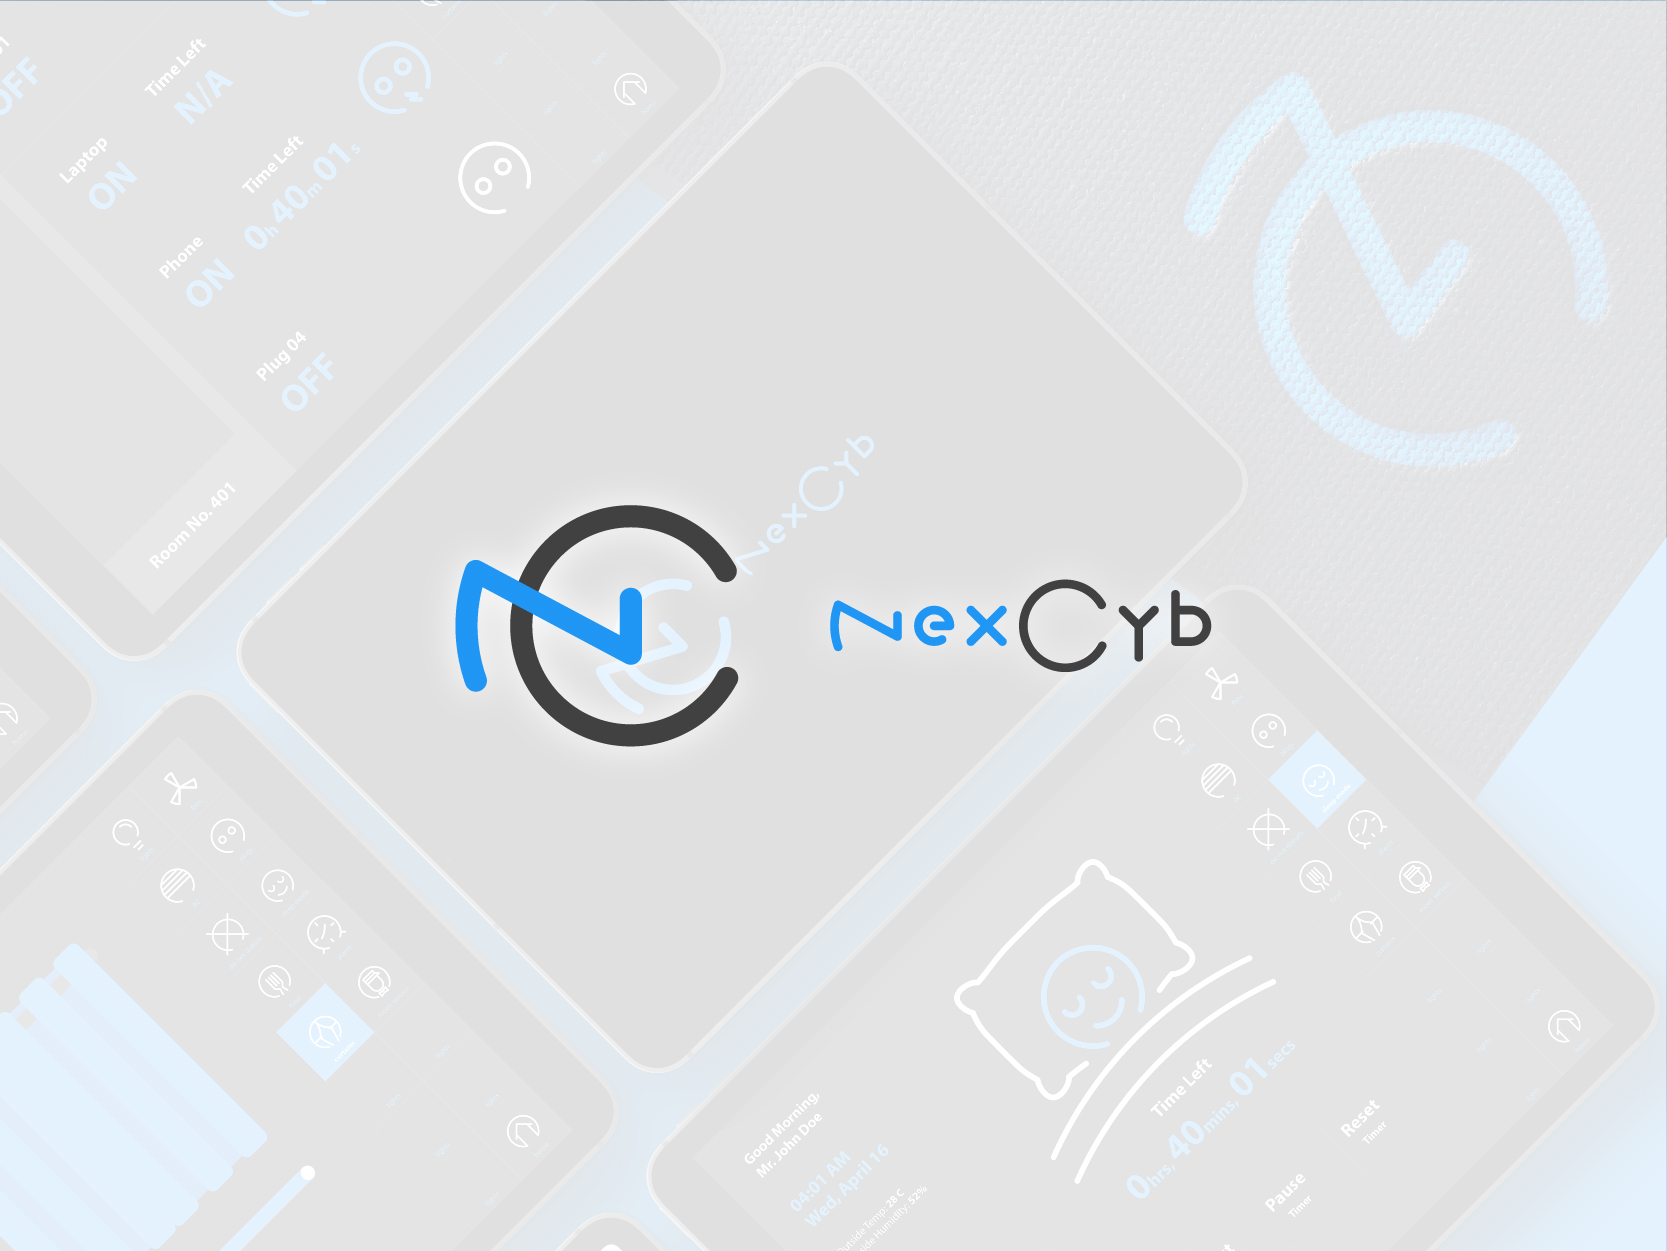 NexCyb Branding and UI Designed by XAXs Corps